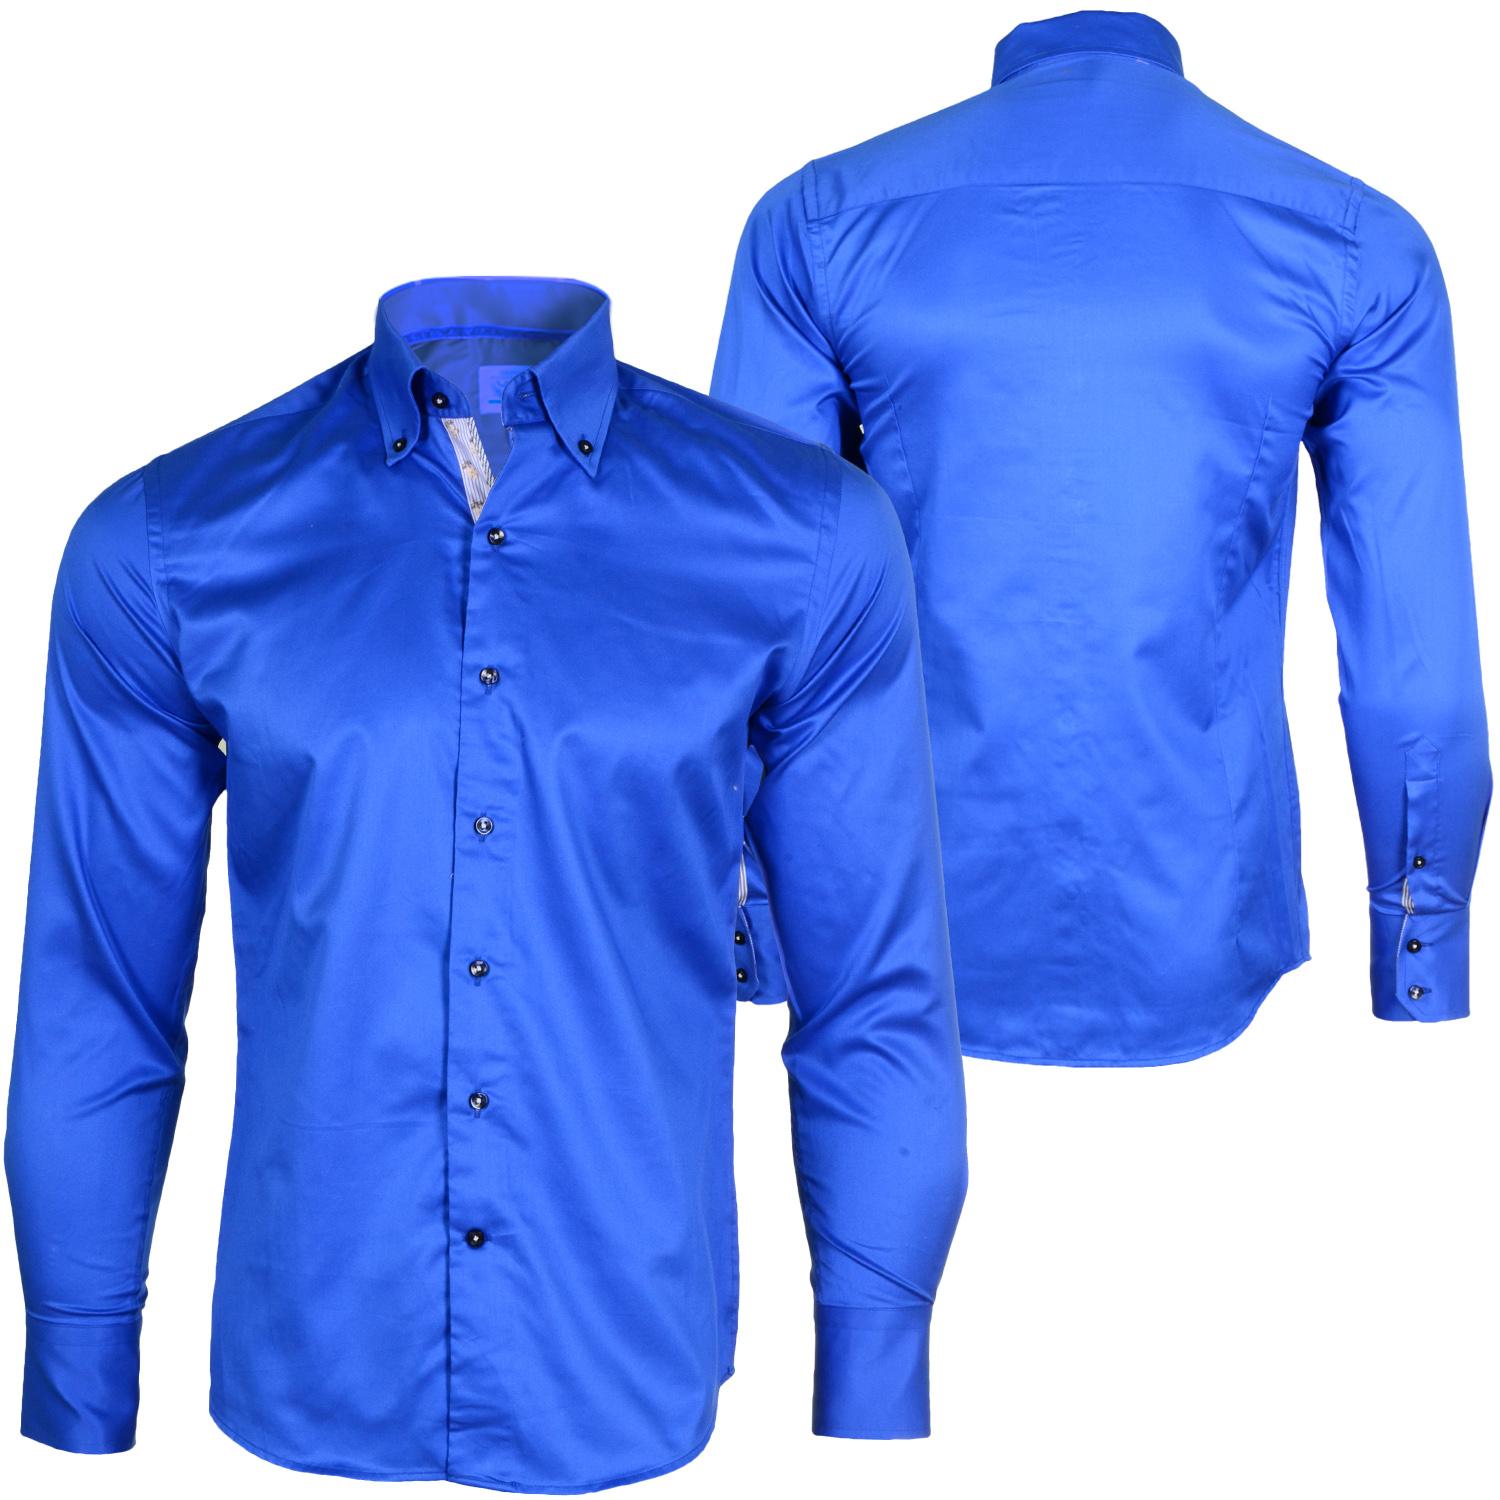 Foto Wam Denim Basic Plain Camisas Azul Real foto 187431